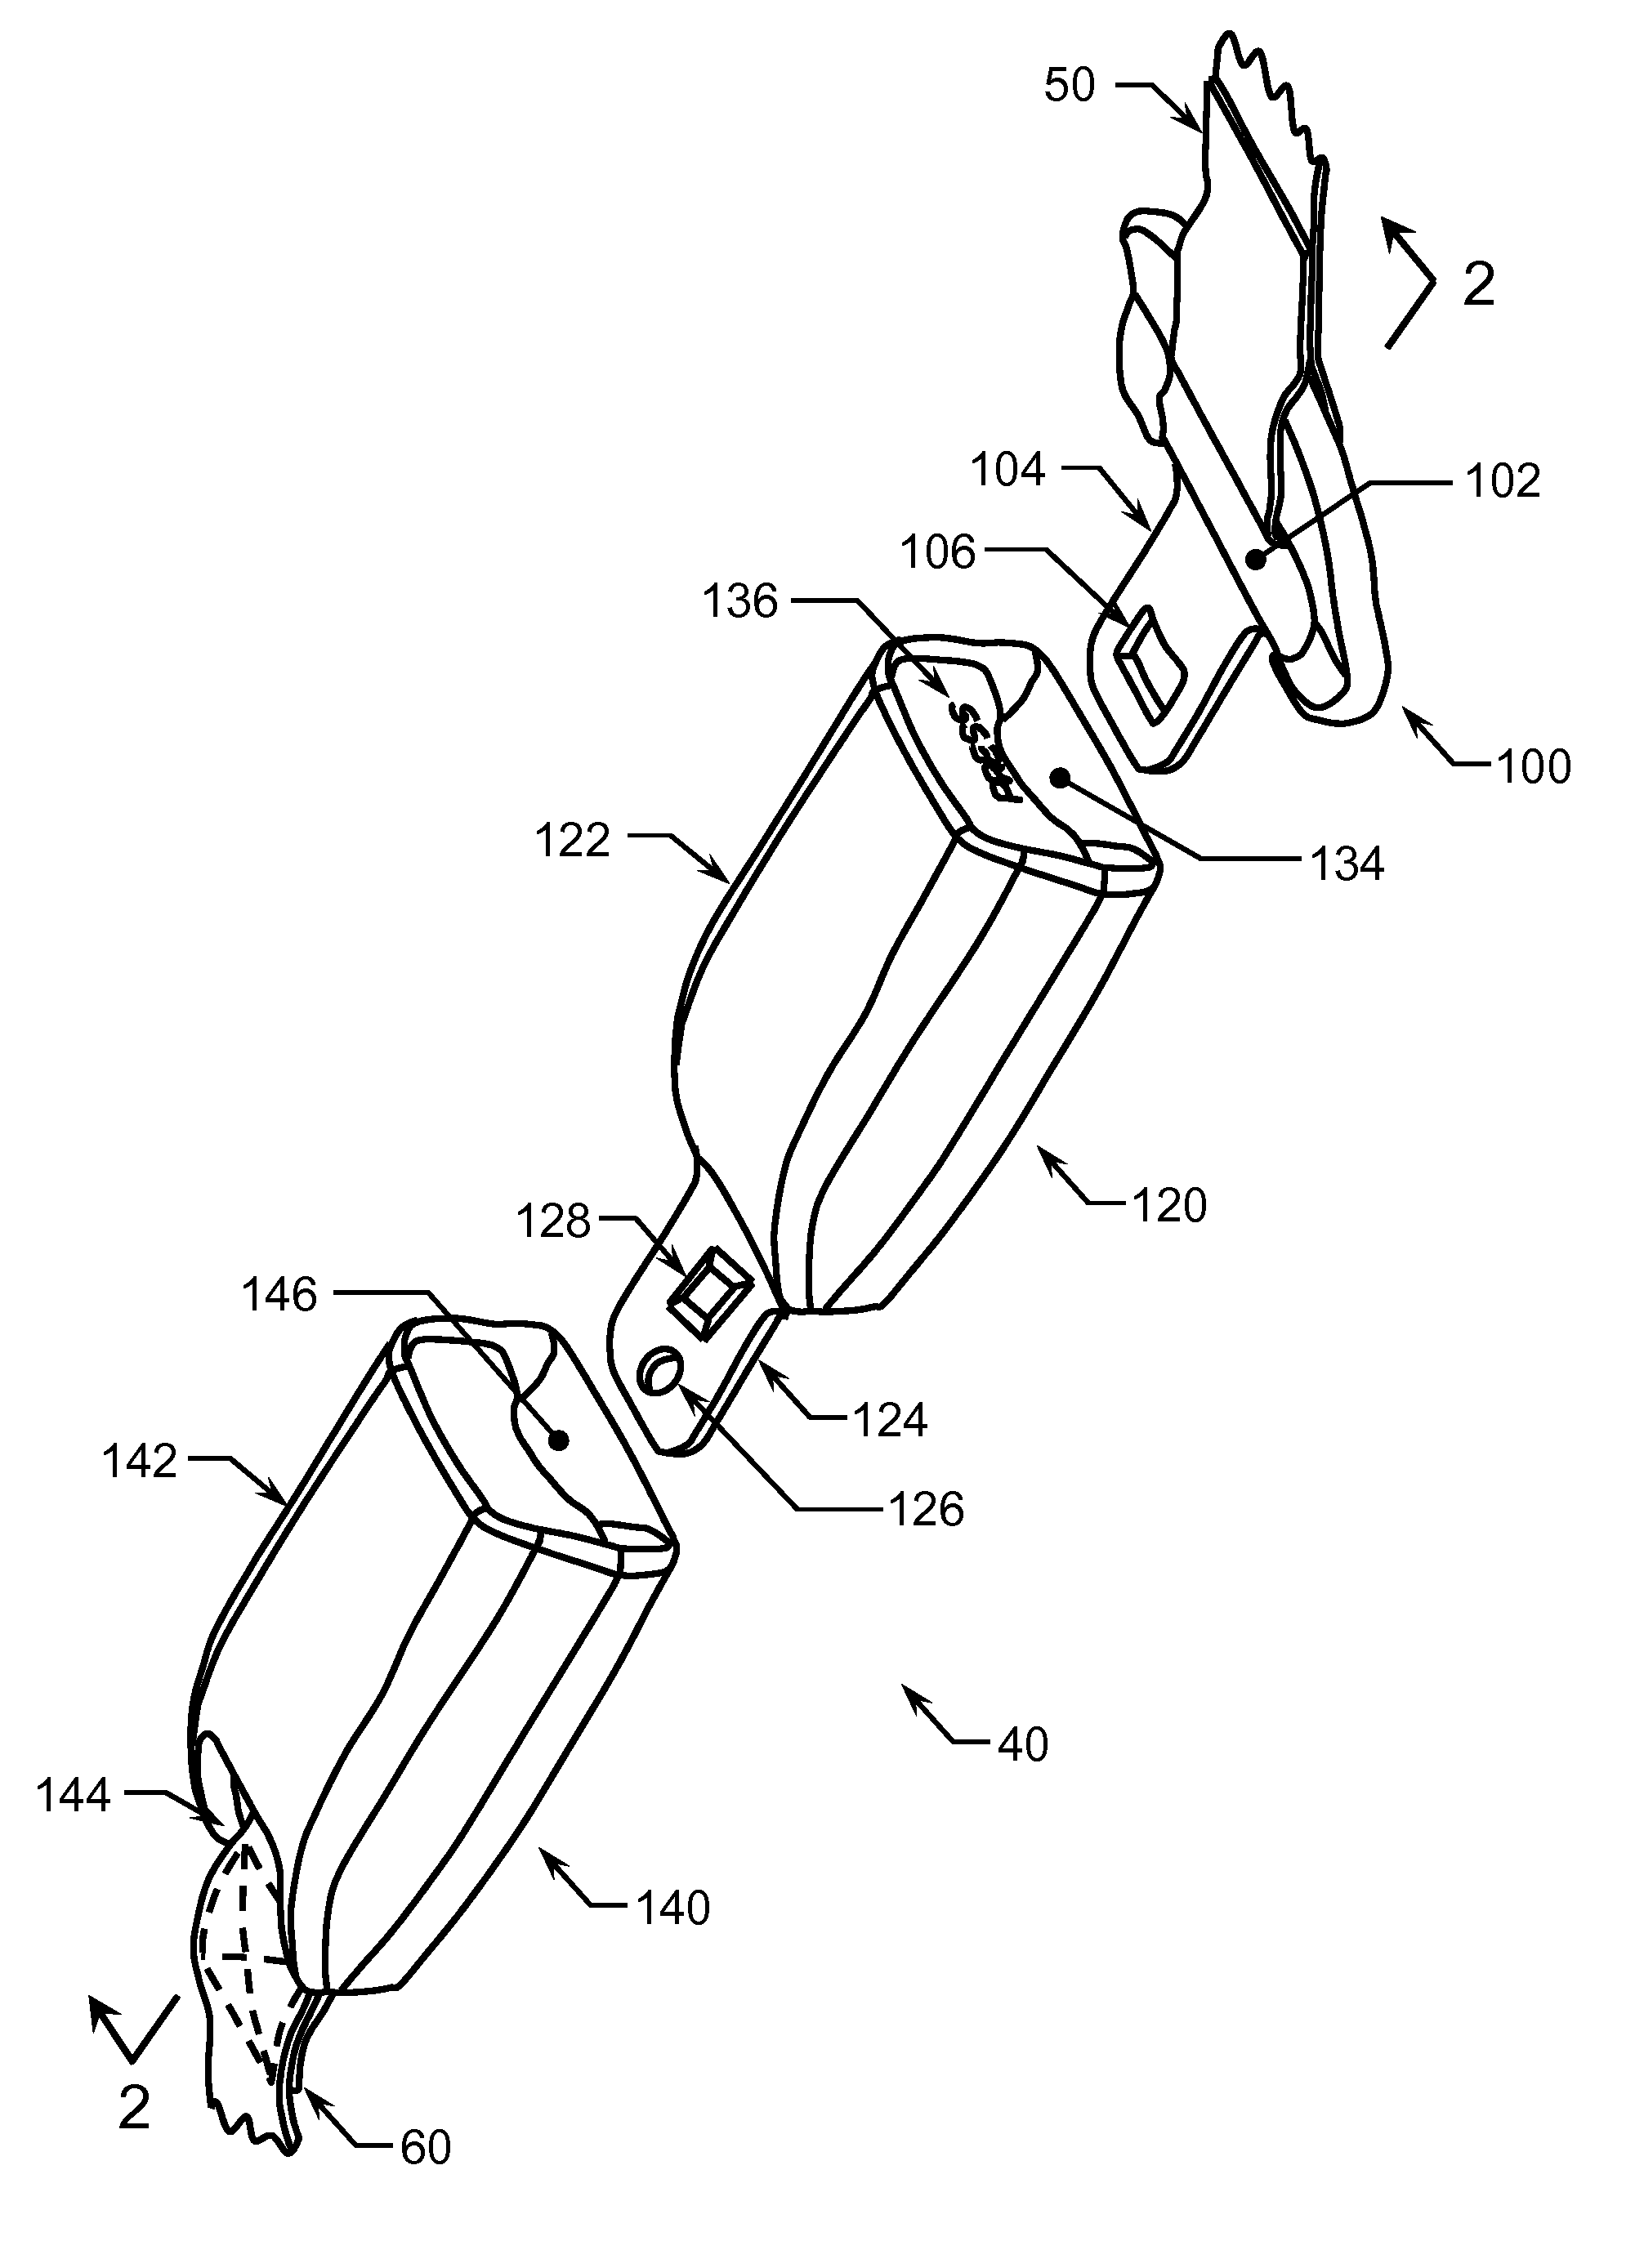 Adaptive seatbelt apparatus